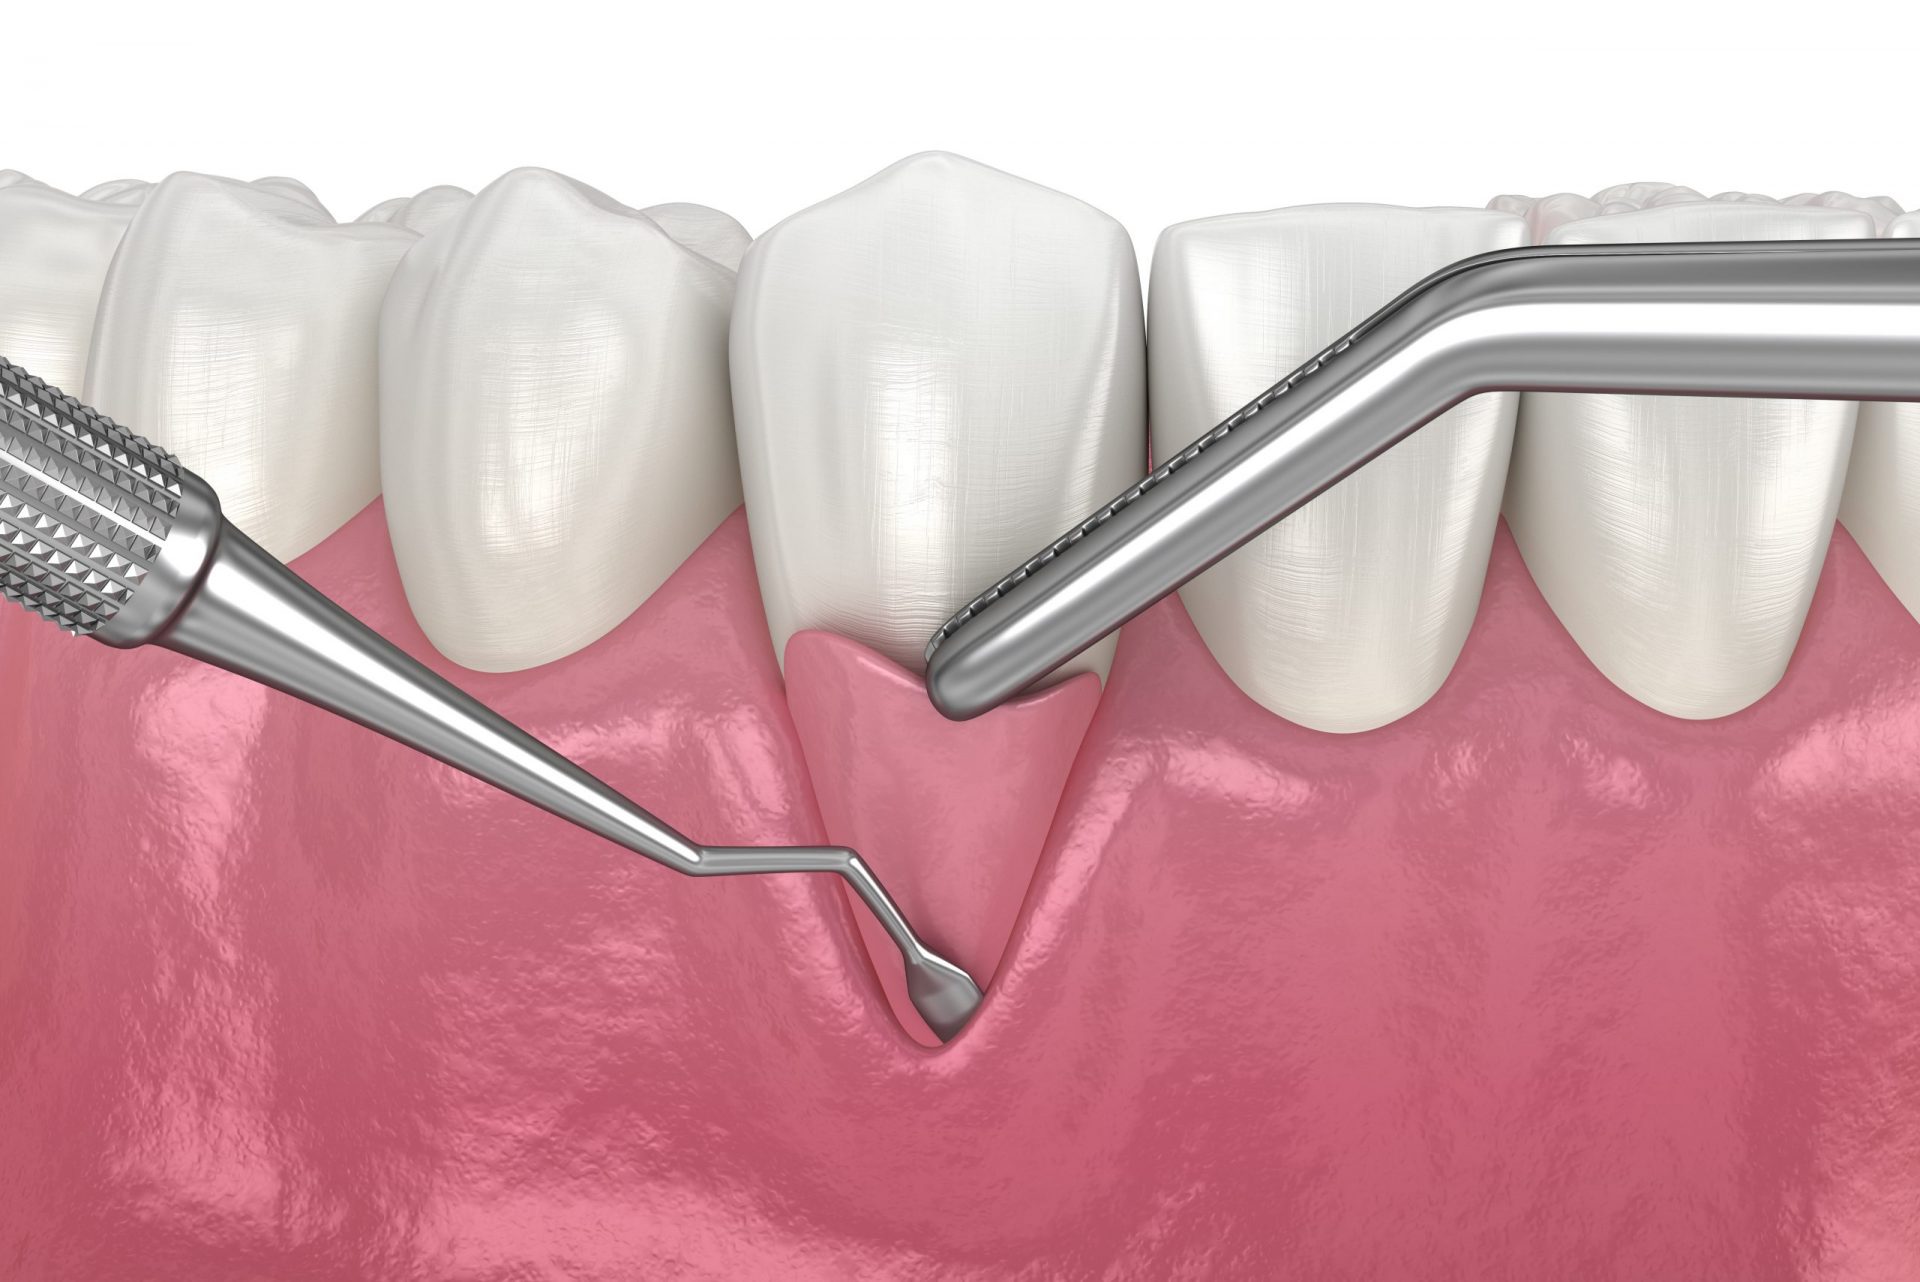 3D rendering of gum graft surgery